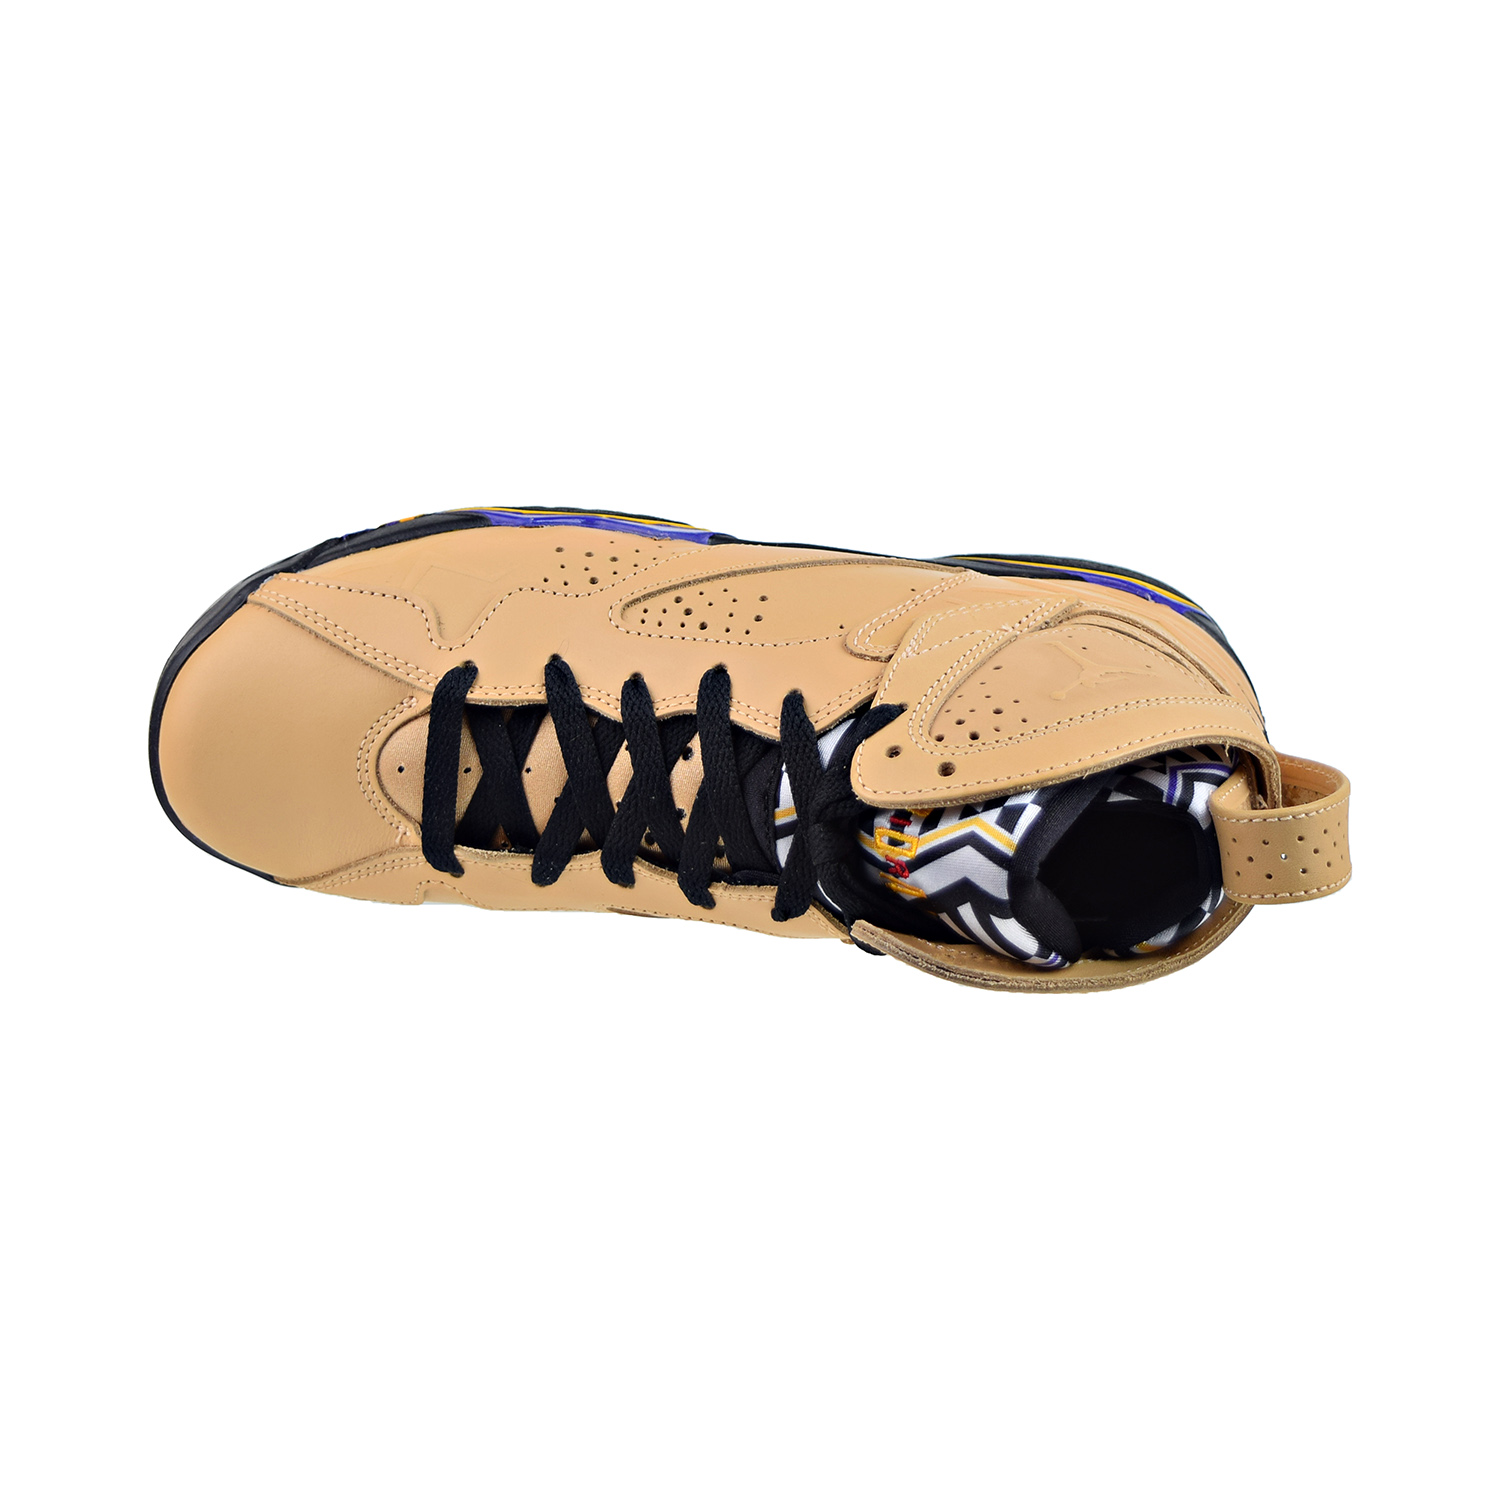 Nike Air Jordan 7 Retro SE "Afrobeats"(GS) Big Kids' Shoes Vachetta Tan  dz4730-200